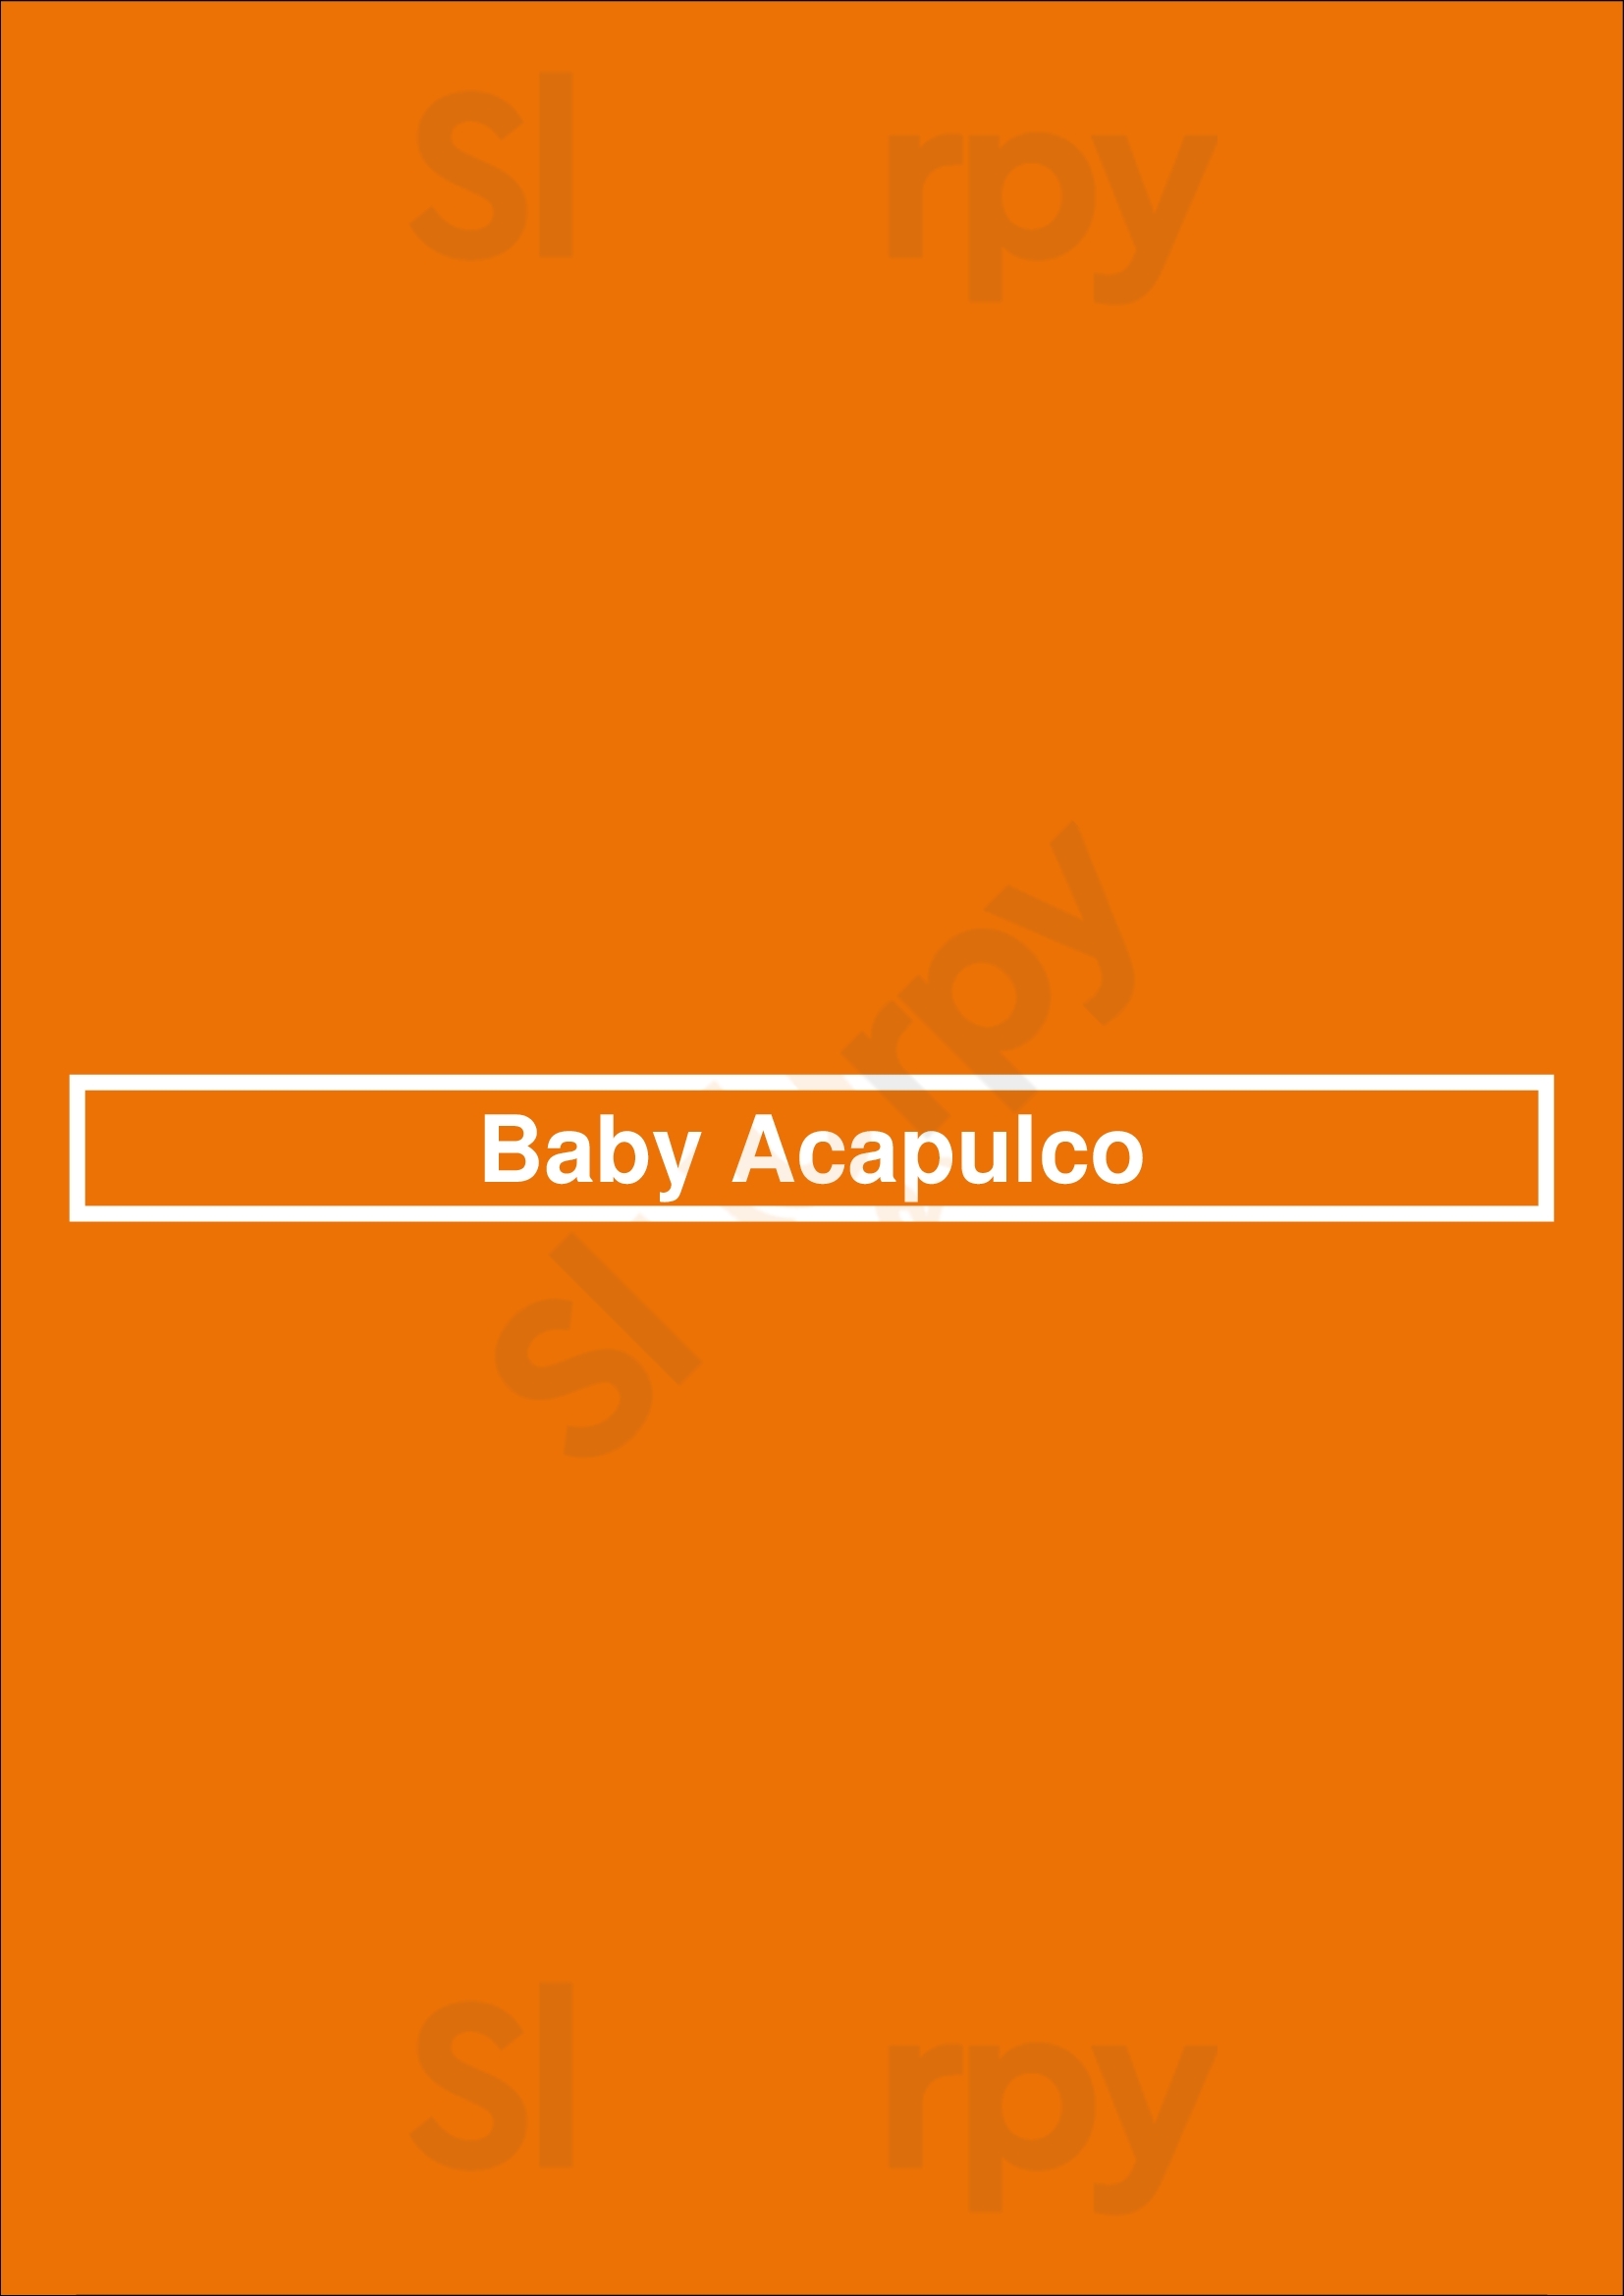 Baby Acapulco Austin Menu - 1